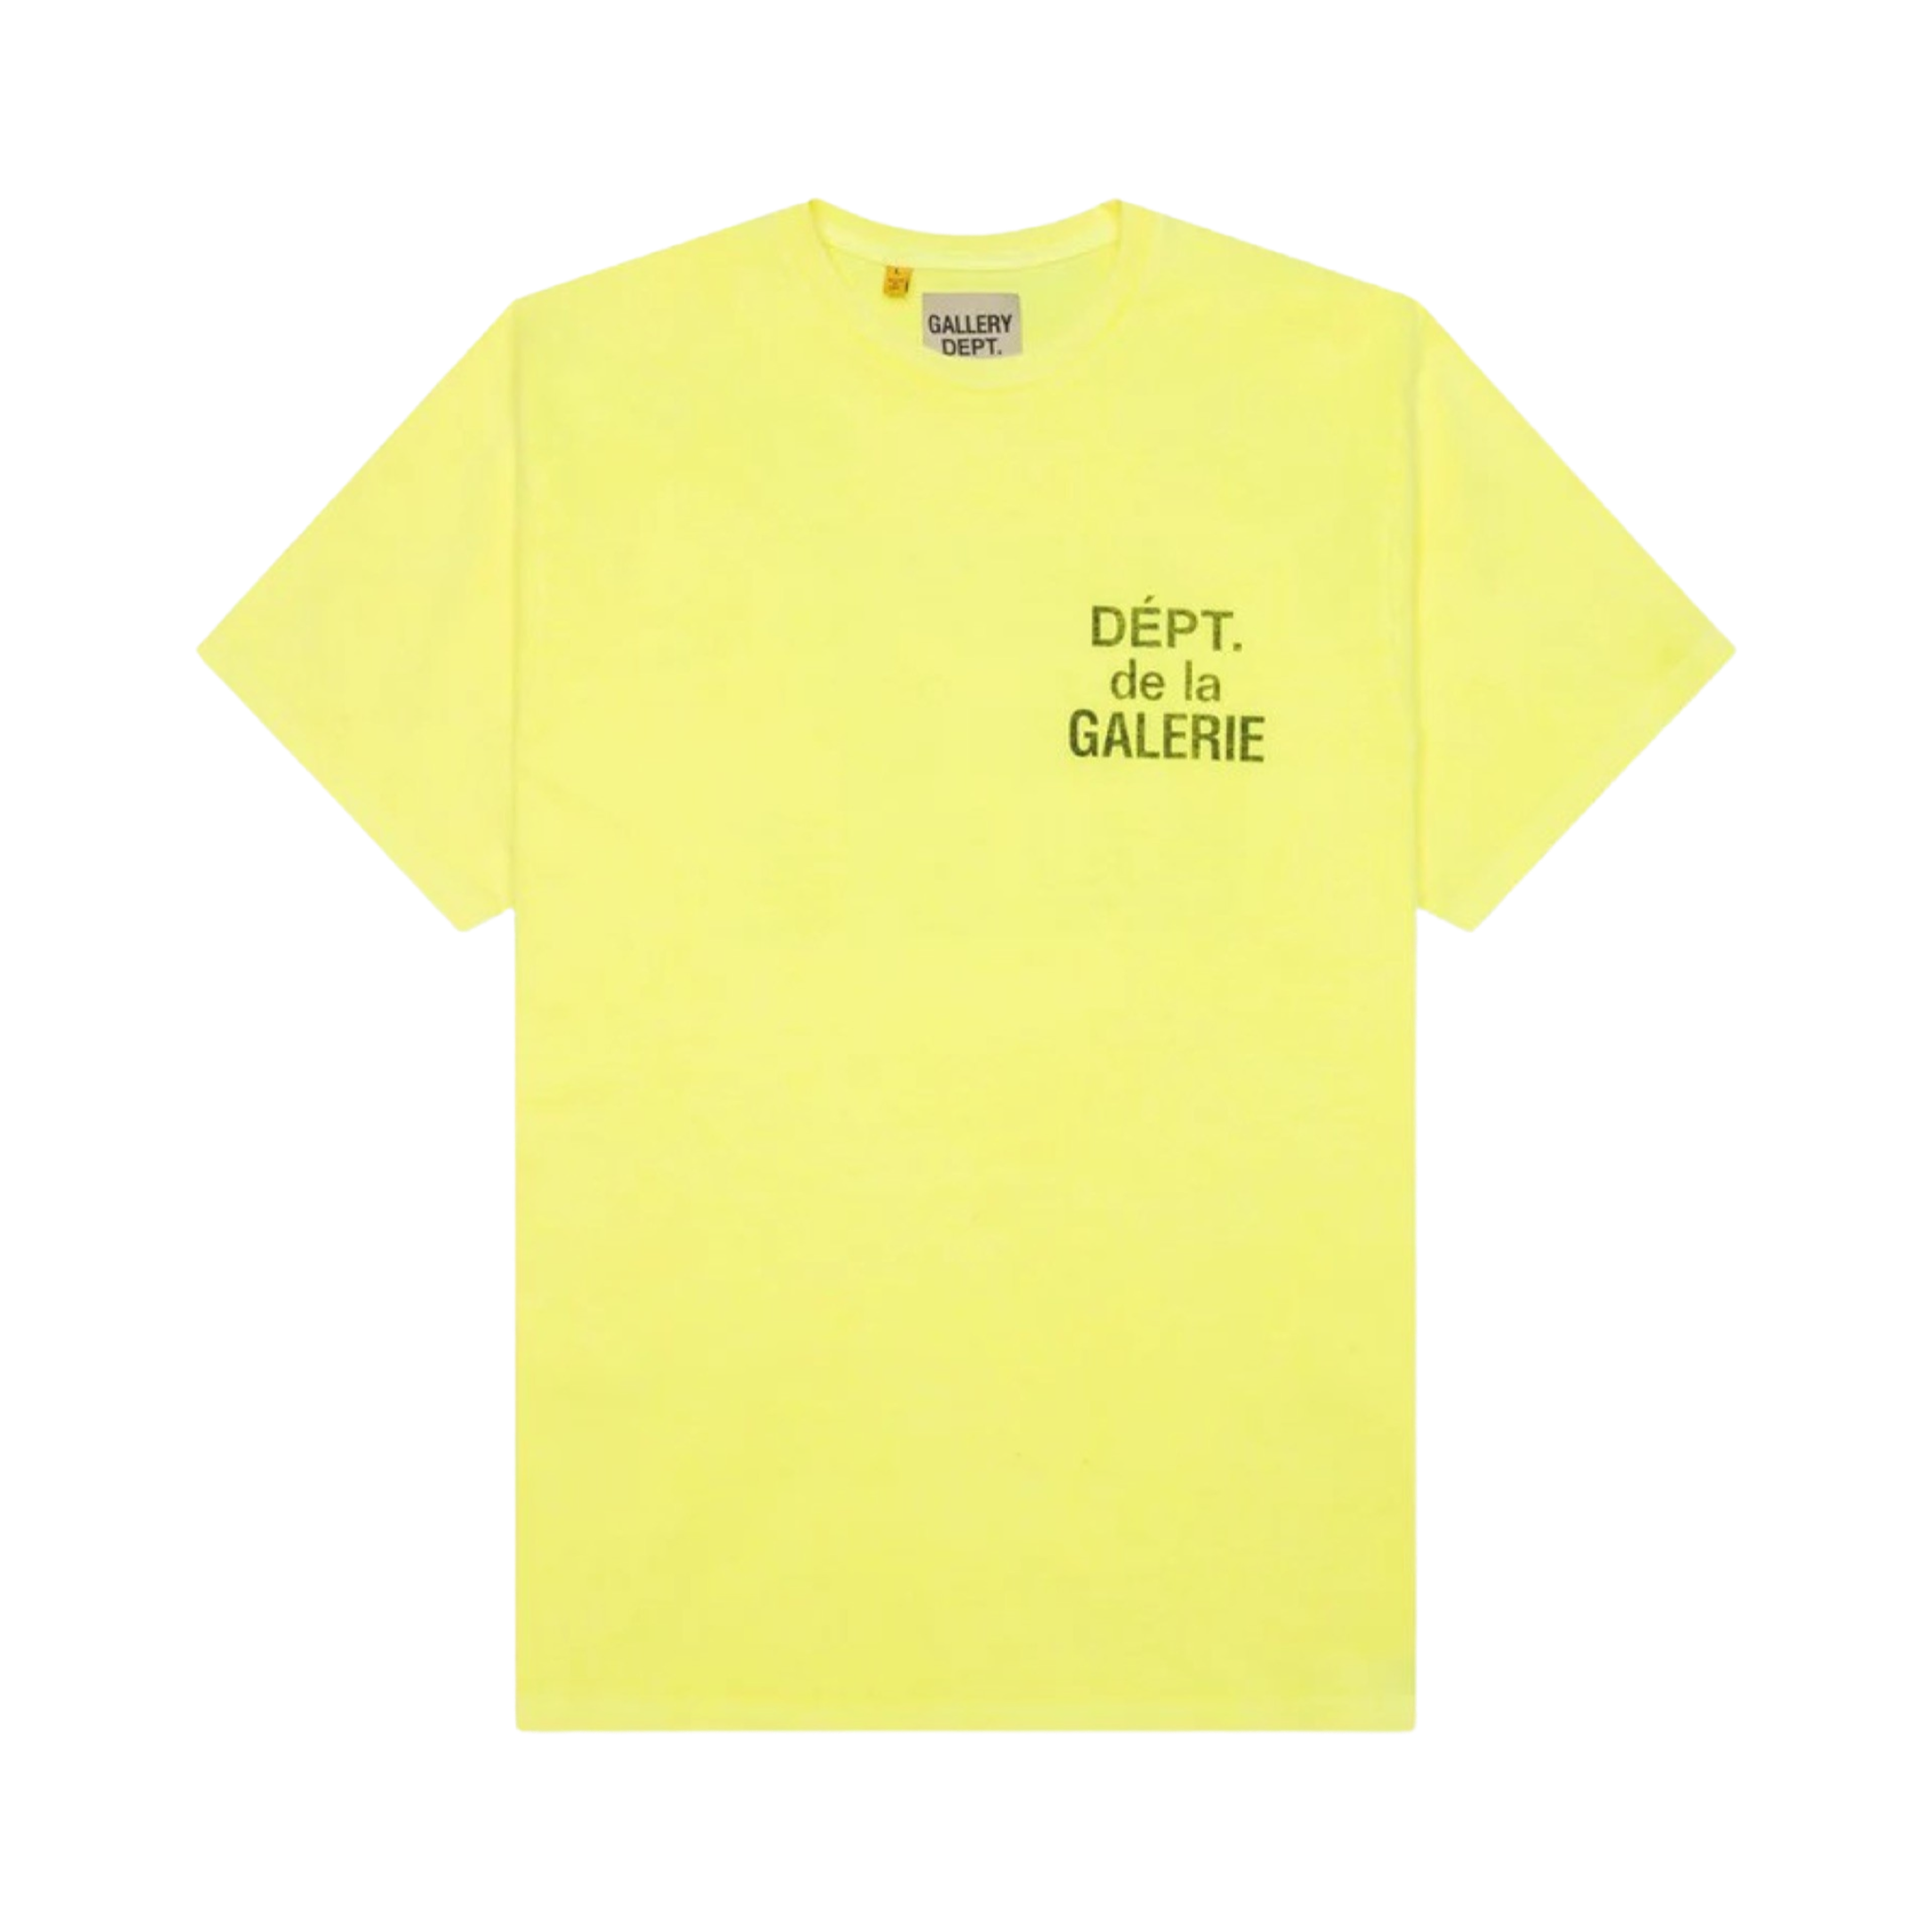 Gallery Dept. T-Shirt Yellow